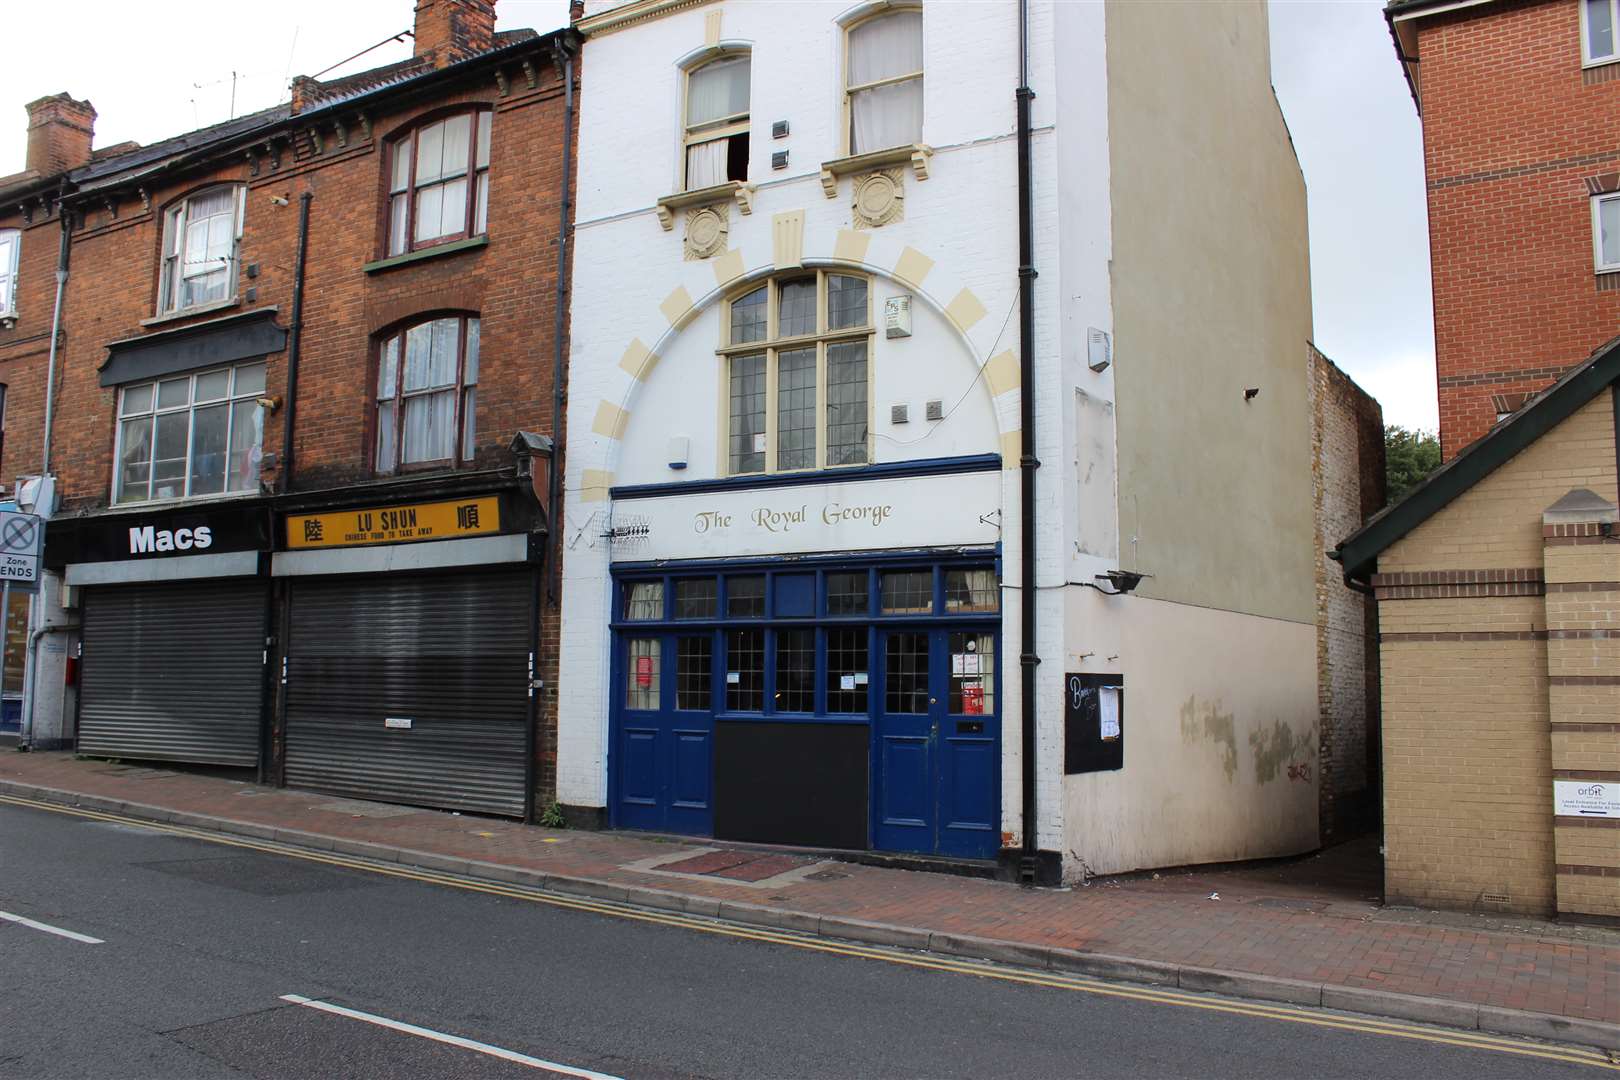 The Royal George pub in Chatham High Street